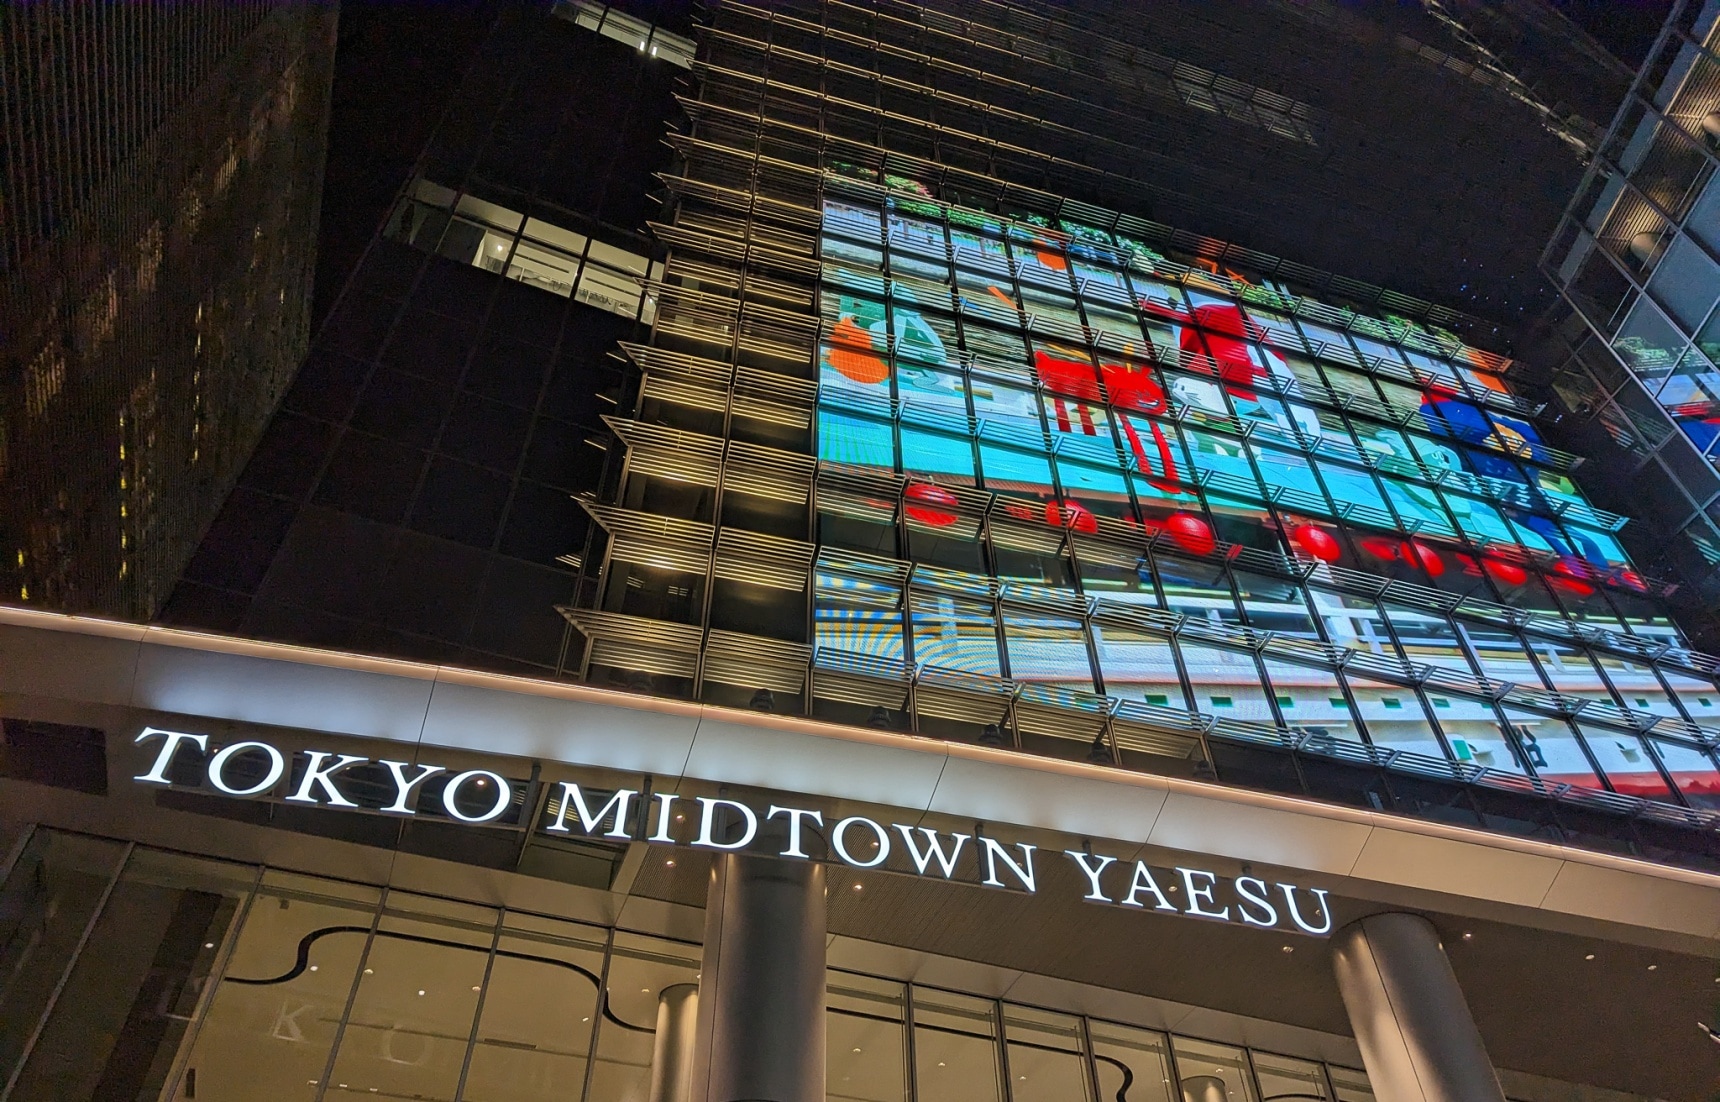 Tokyo Midtown Yaesu: The City's Trendy New Dining/Shopping Spot